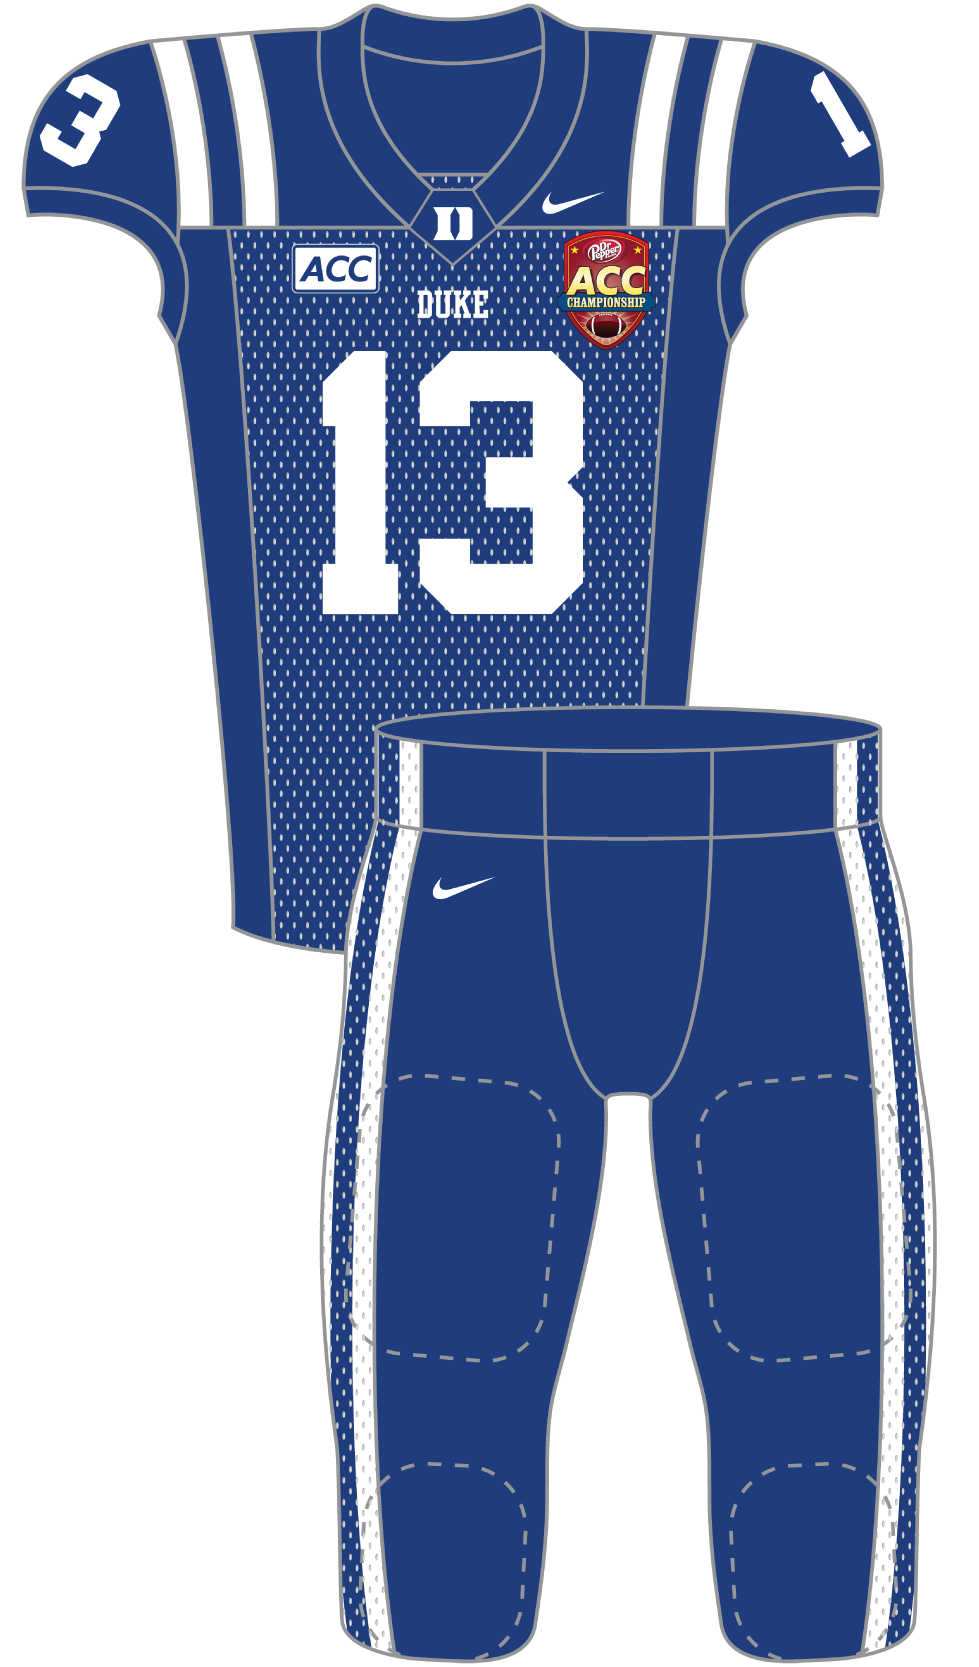 Duke 2013 Blue Uniform